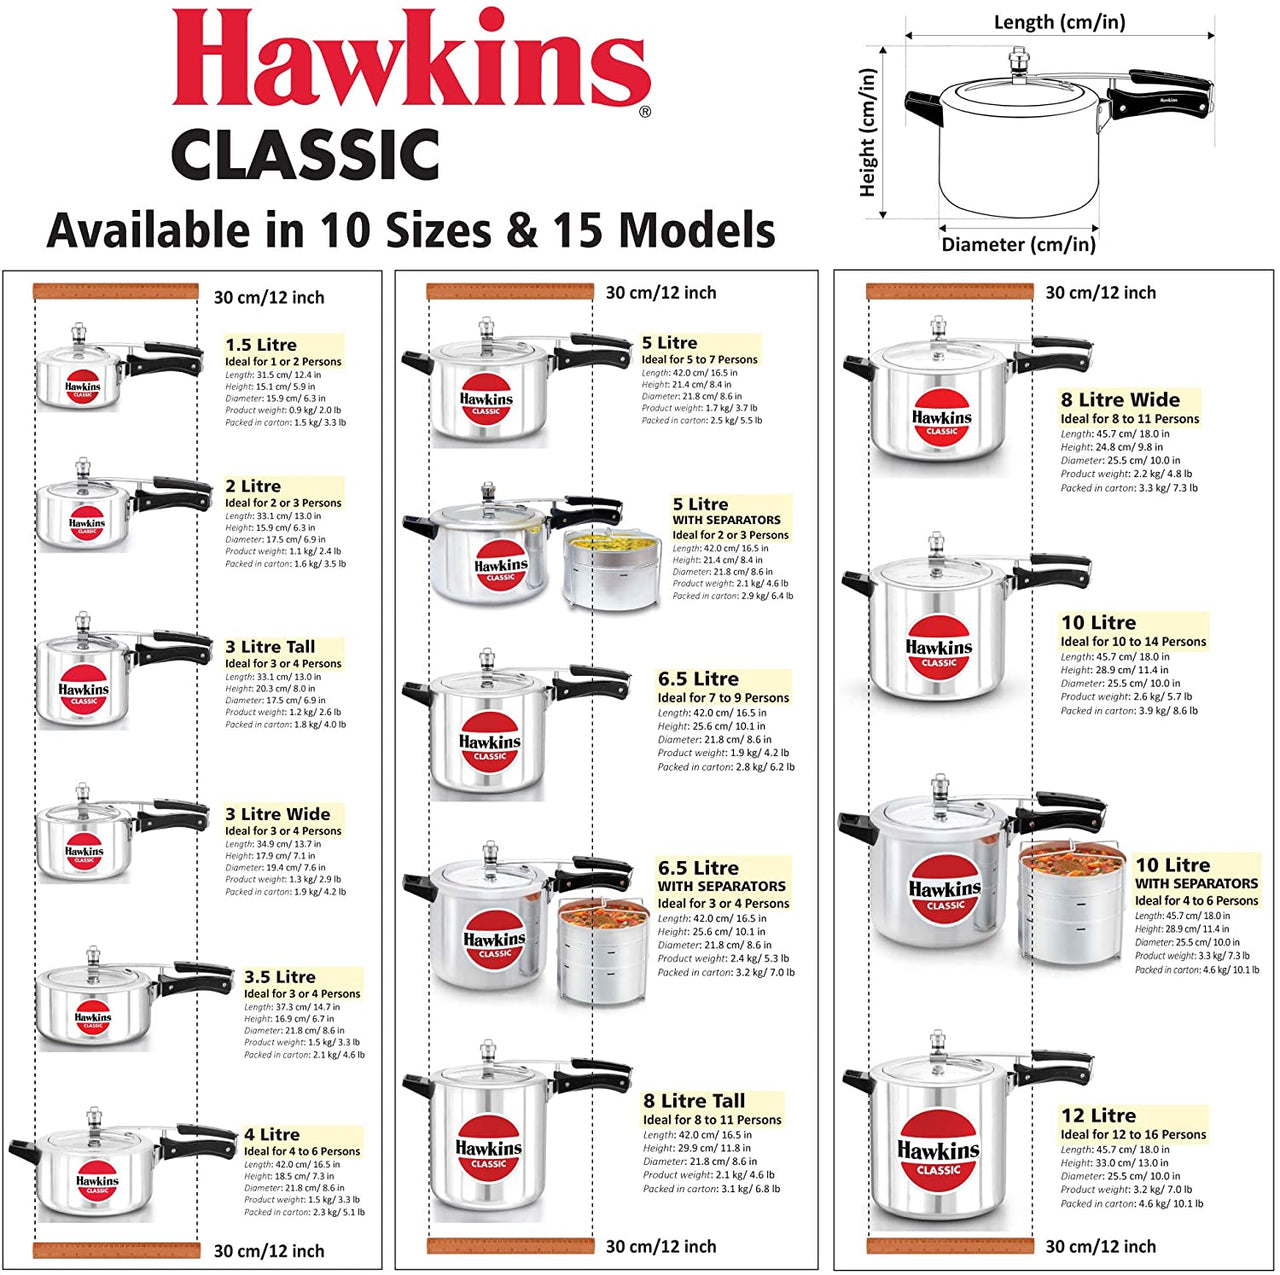 HAWKIN Classic 12-Liter Aluminum Pressure Cooker